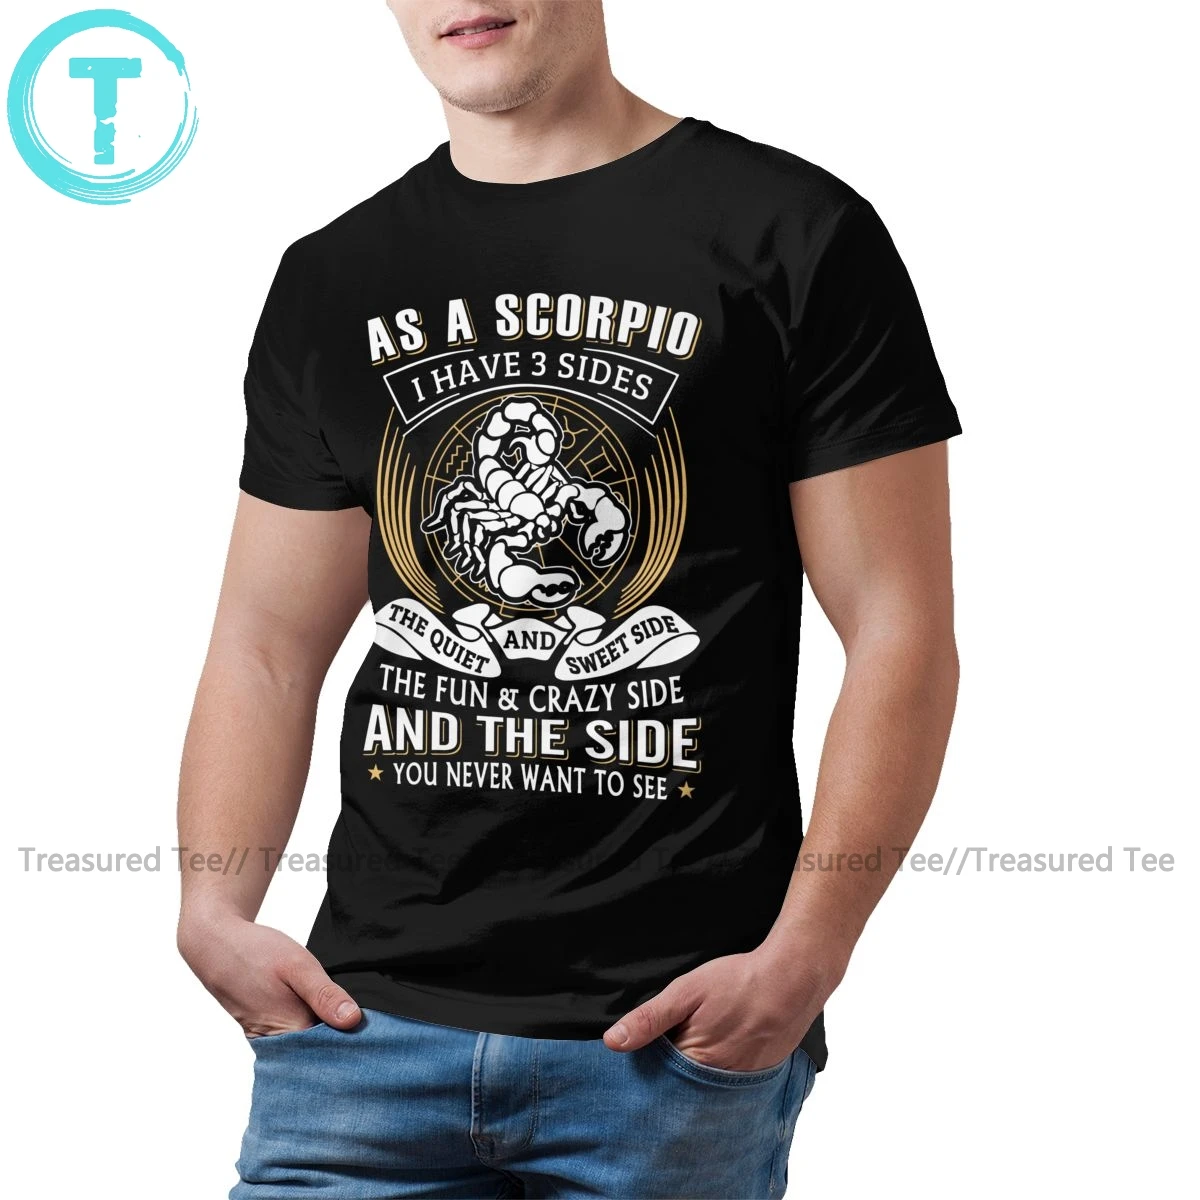 Scorpio T Shirt As A Scorpio I Have 3 Sides T-Shirt Mens Oversize Tee Shirt Classic Cute Short-Sleeve Tshirt